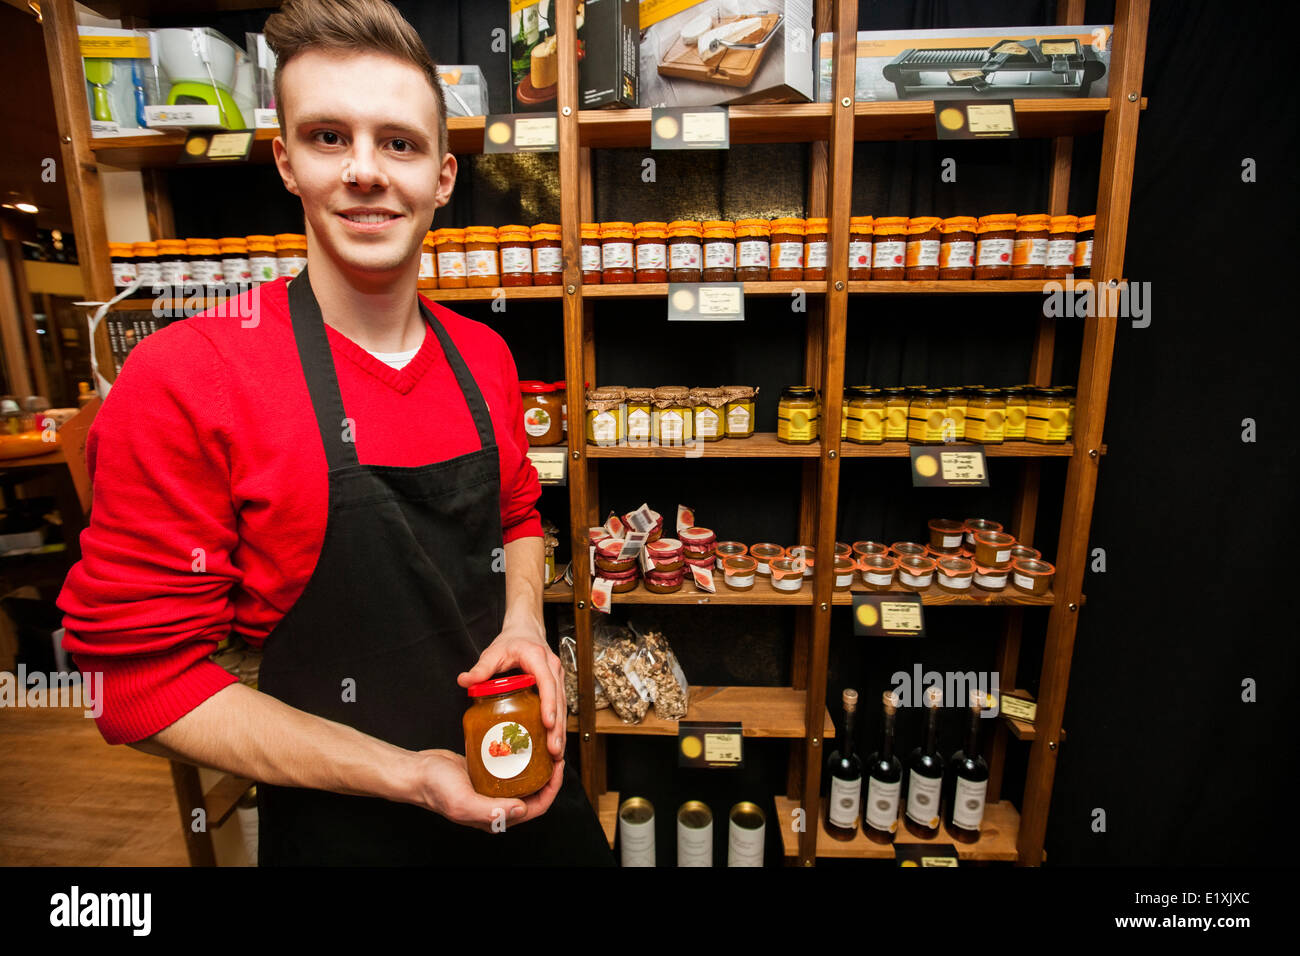 Portrait of smiling salesperson holding jar in supermarket Stock Photo